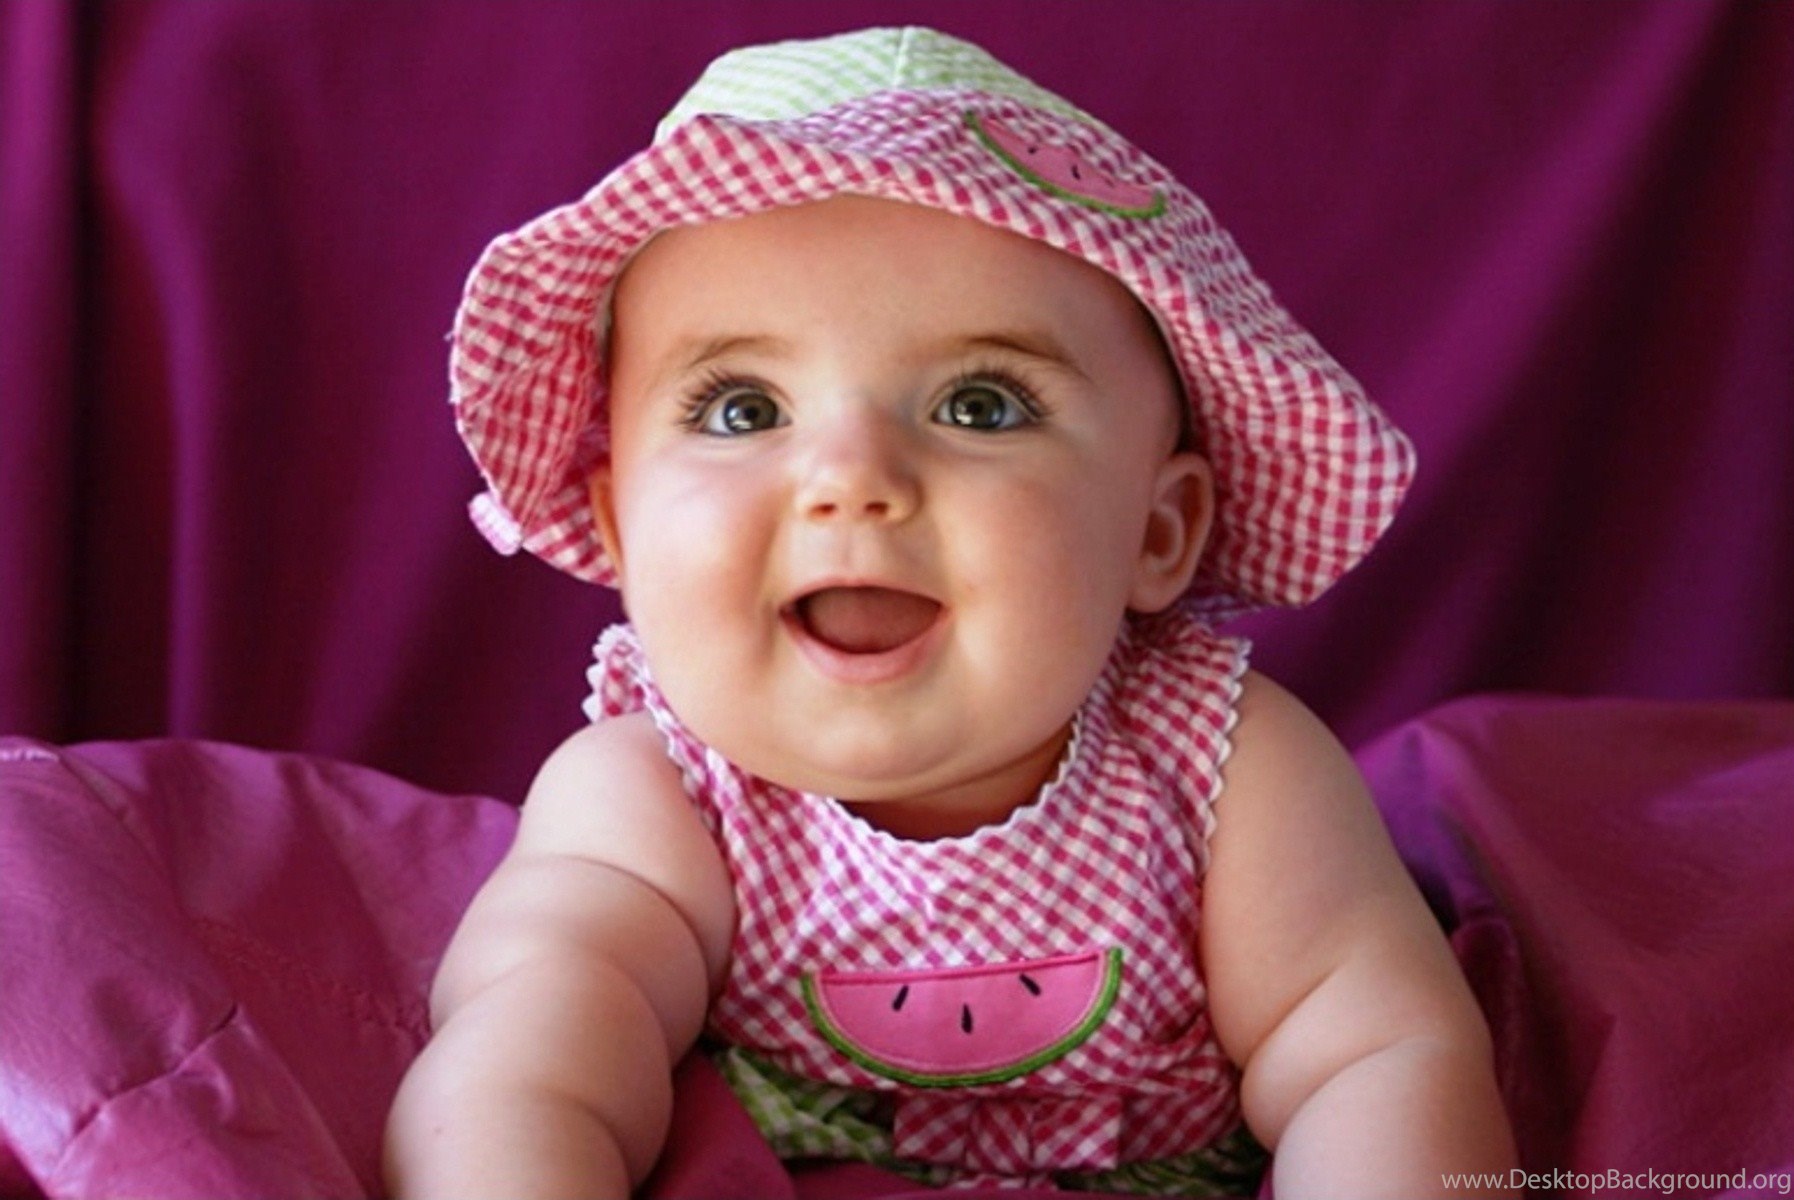  Cute  Baby  Girl Wallpapers  Facebook Desktop Background